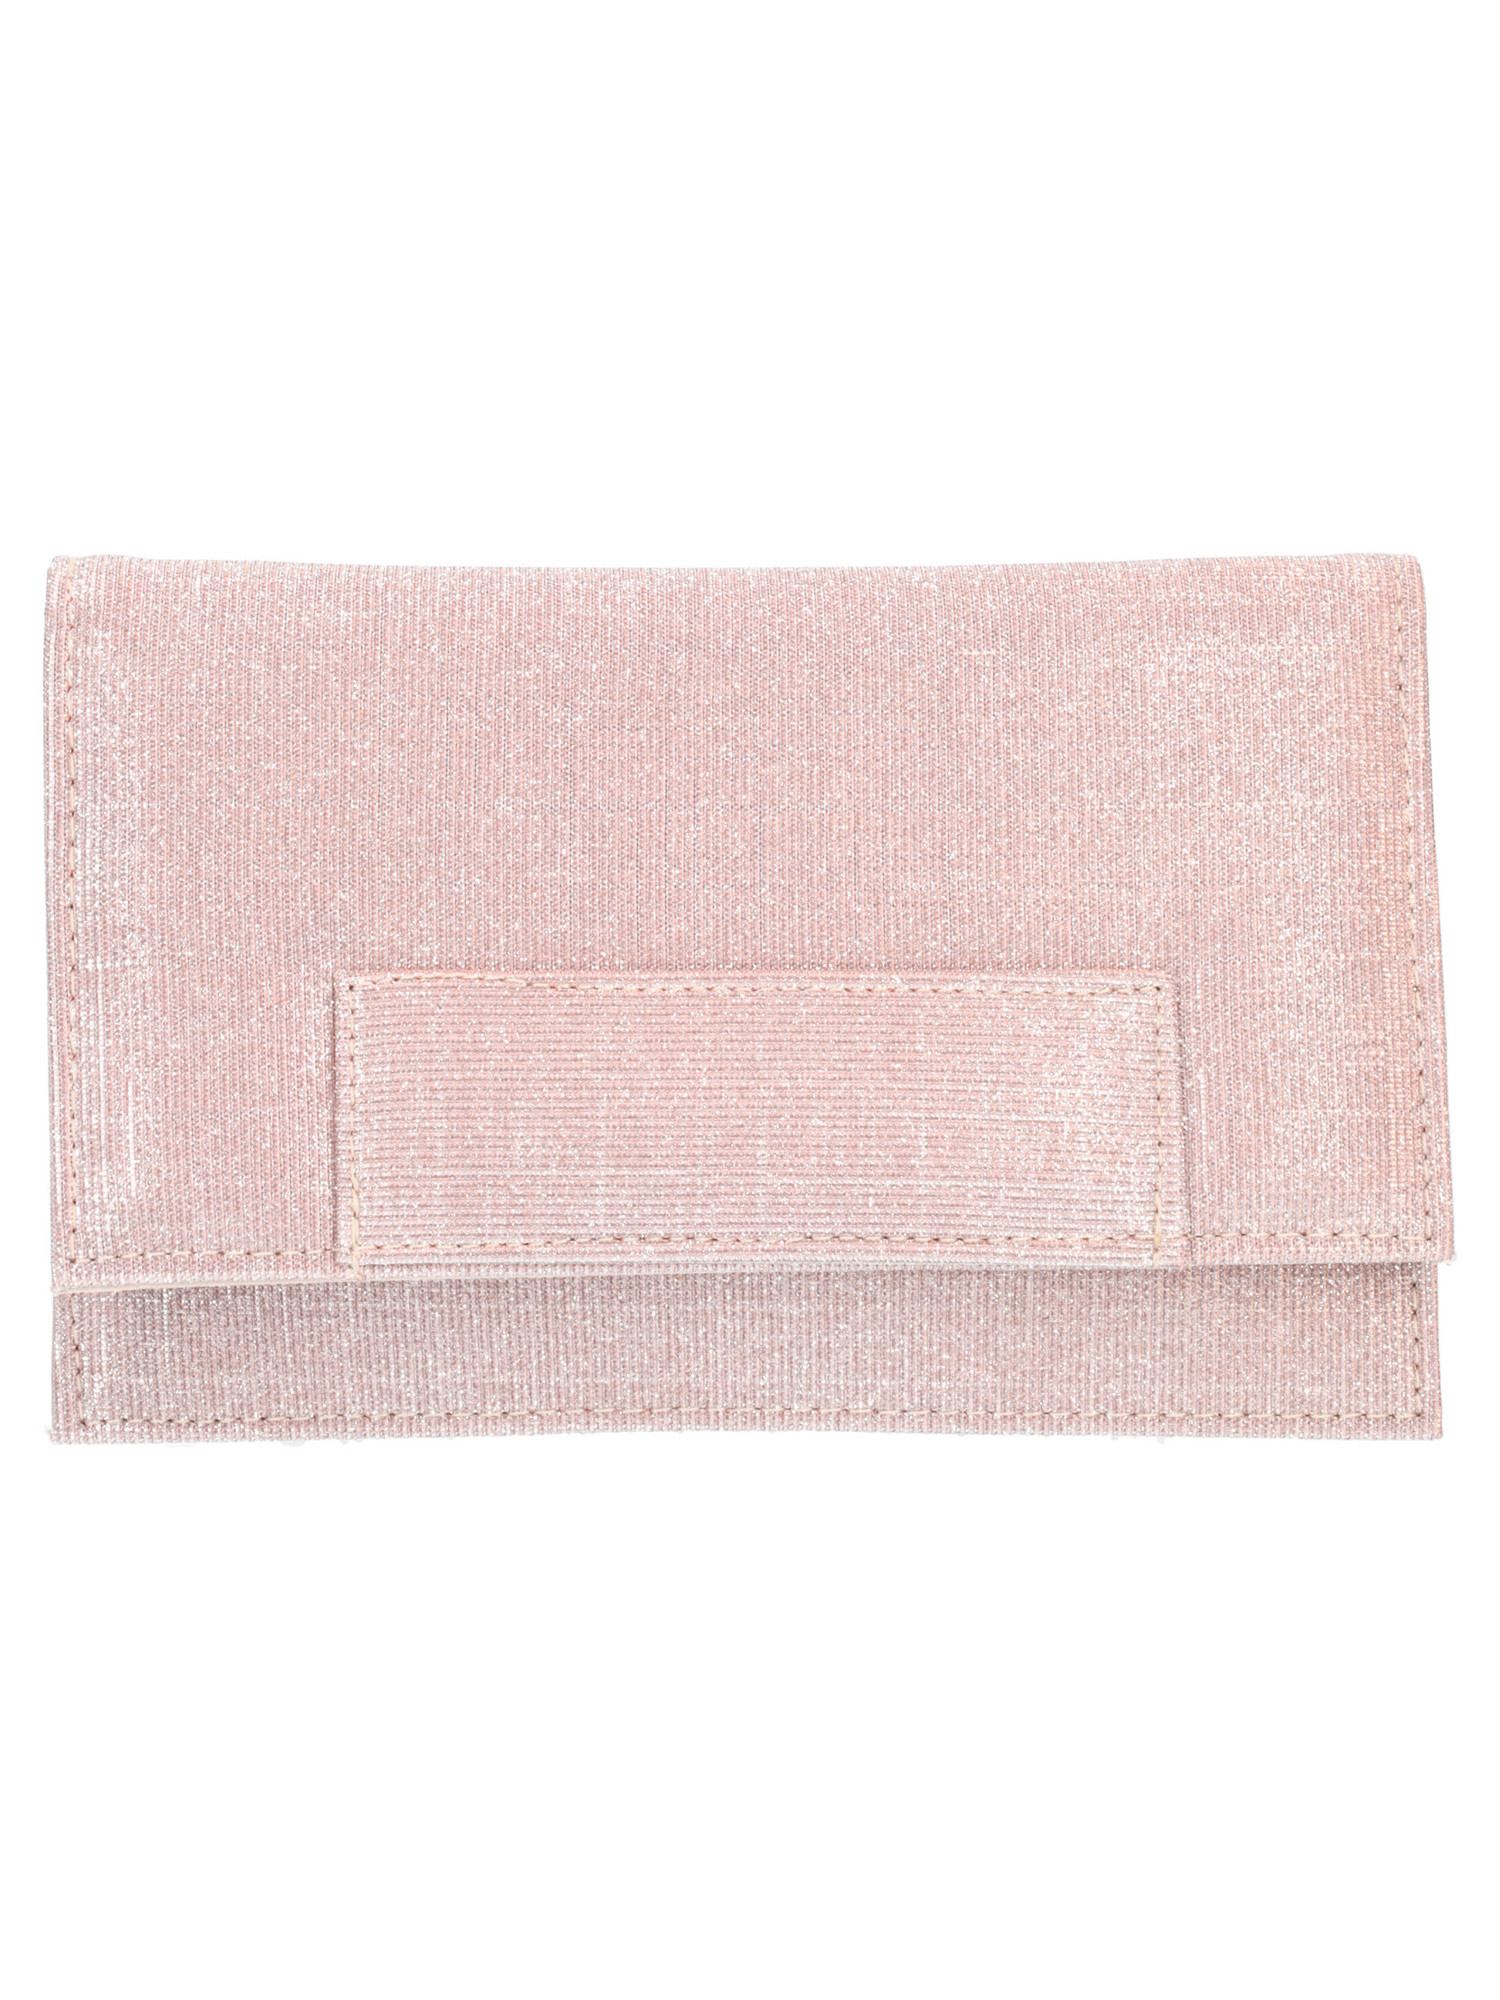 pochette-elegante-melluso-da-donna-rosa-glitter-ad5572